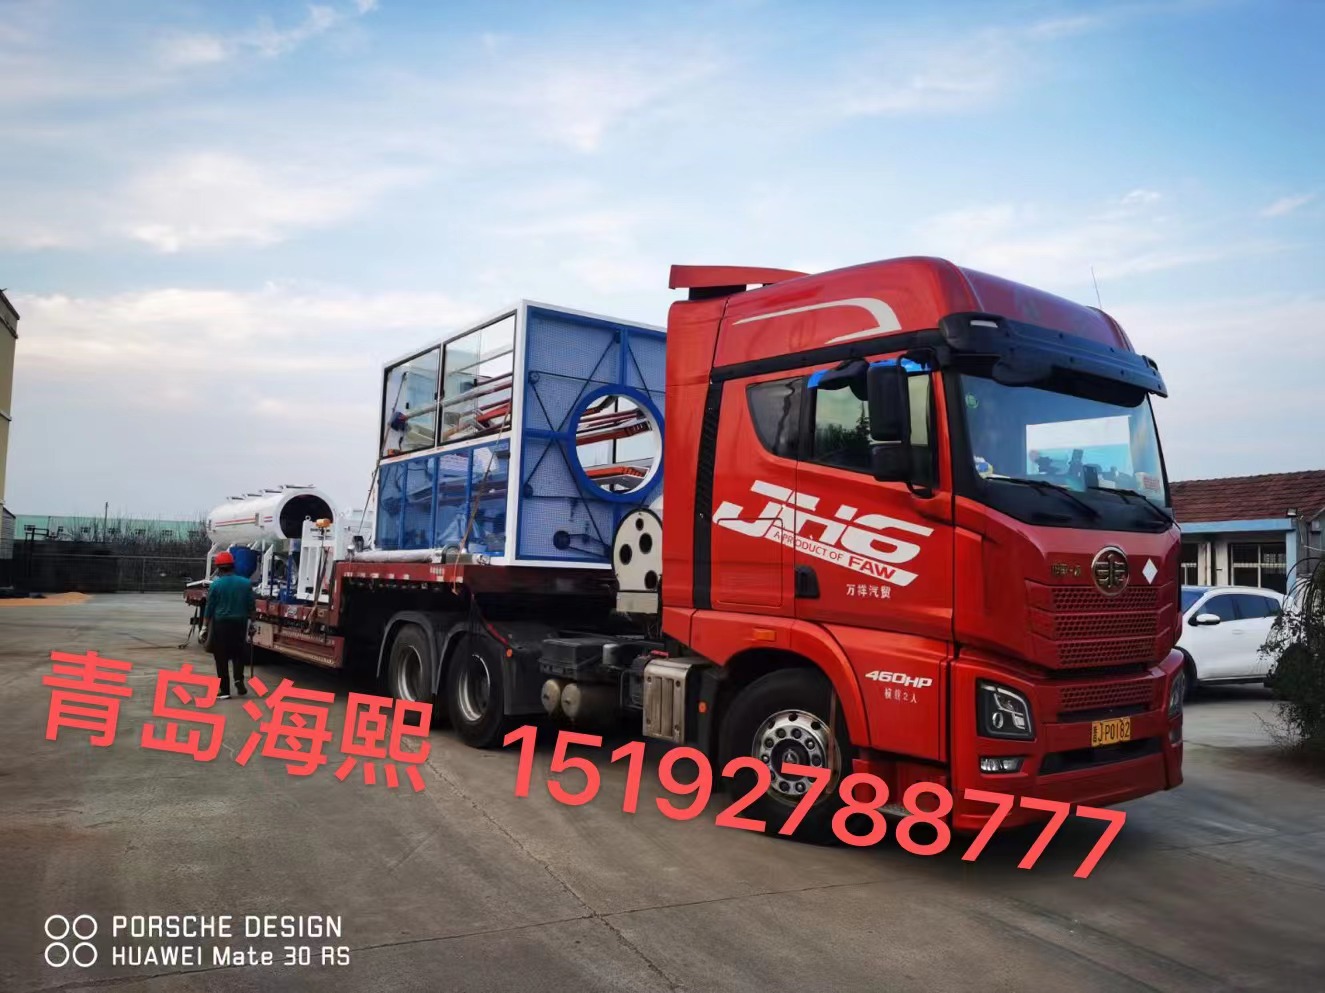 Shanxi Saiyang New Thermal Insulation Material Co., LTD. - The second car